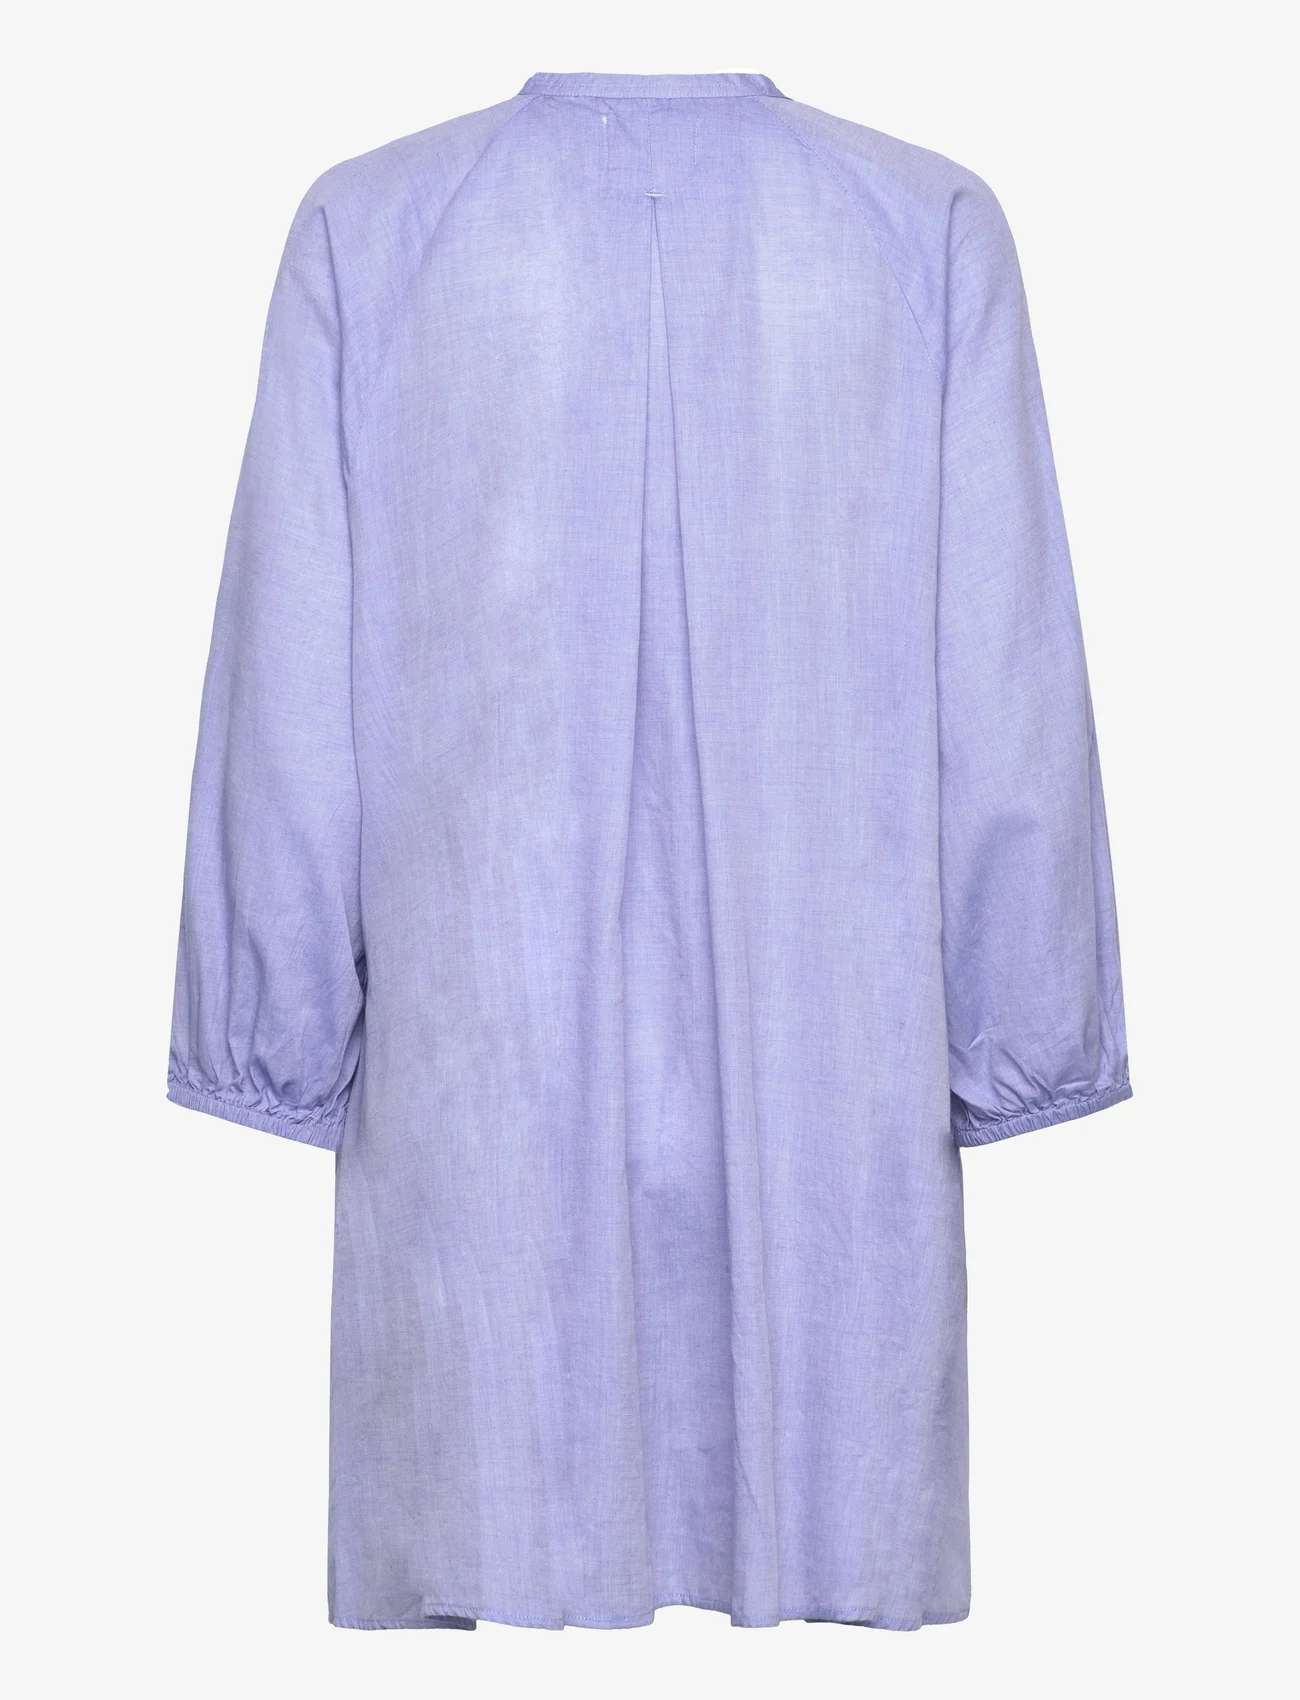 Moshi Moshi Mind - luna tunic dress chambray - särkkleidid - light blue - 1